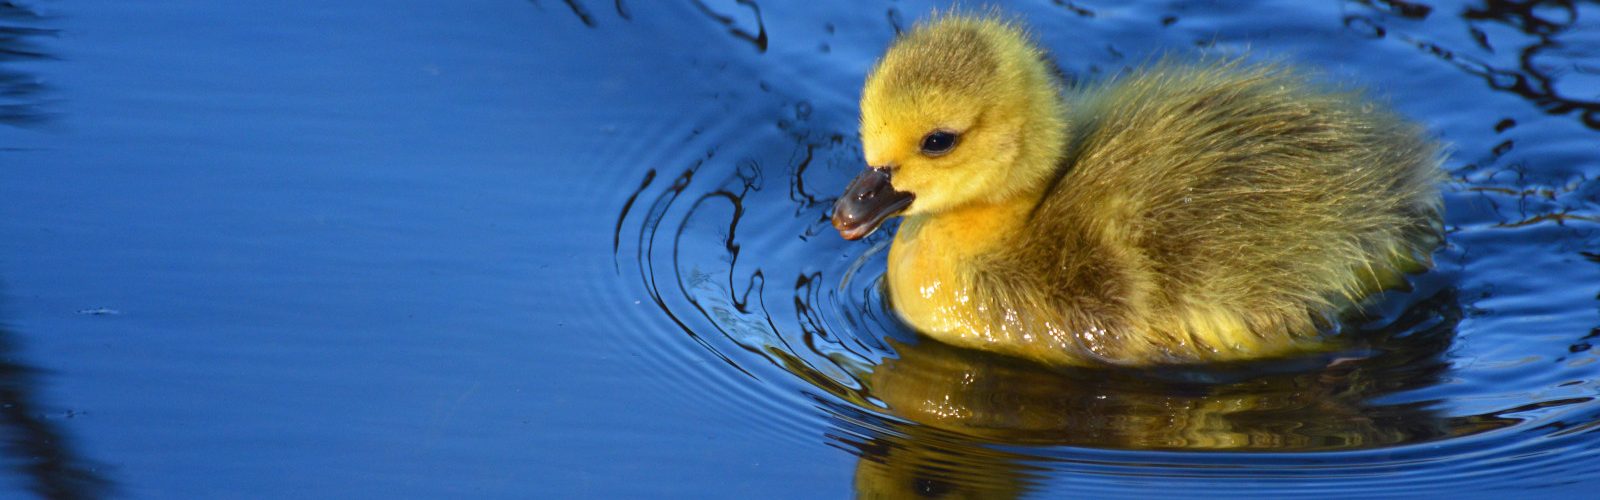 A wee spring gosling on a pond in Edinburgh